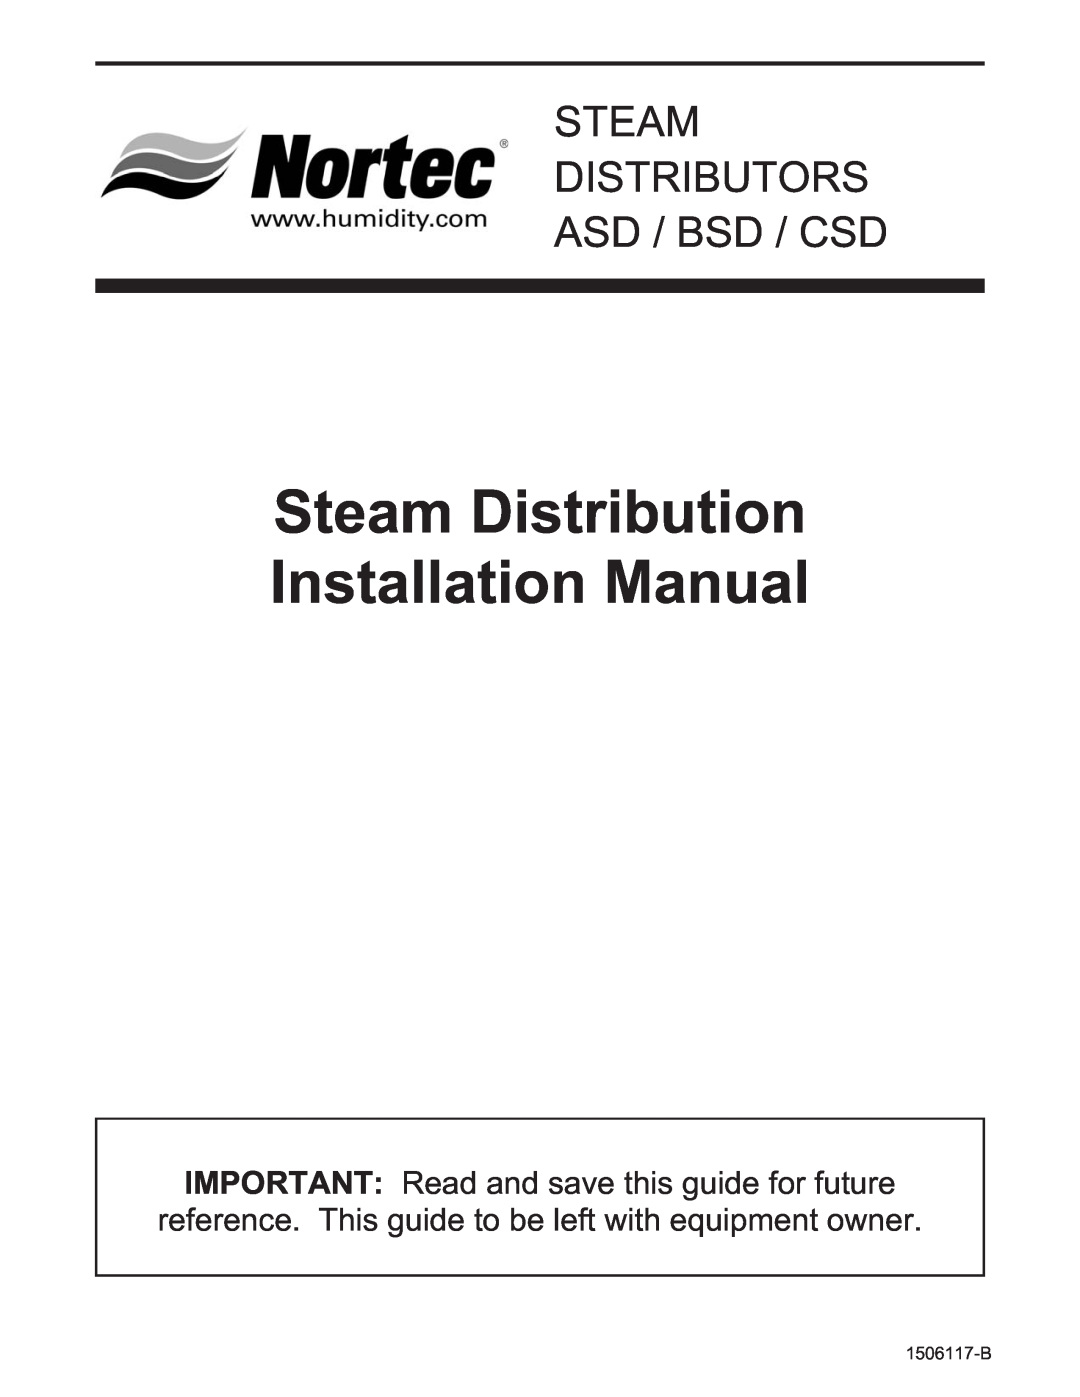 Nortec CSD, ASD installation manual Steam Distribution Installation Manual, Steam Distributors Asd / Bsd / Csd, 1506117-B 